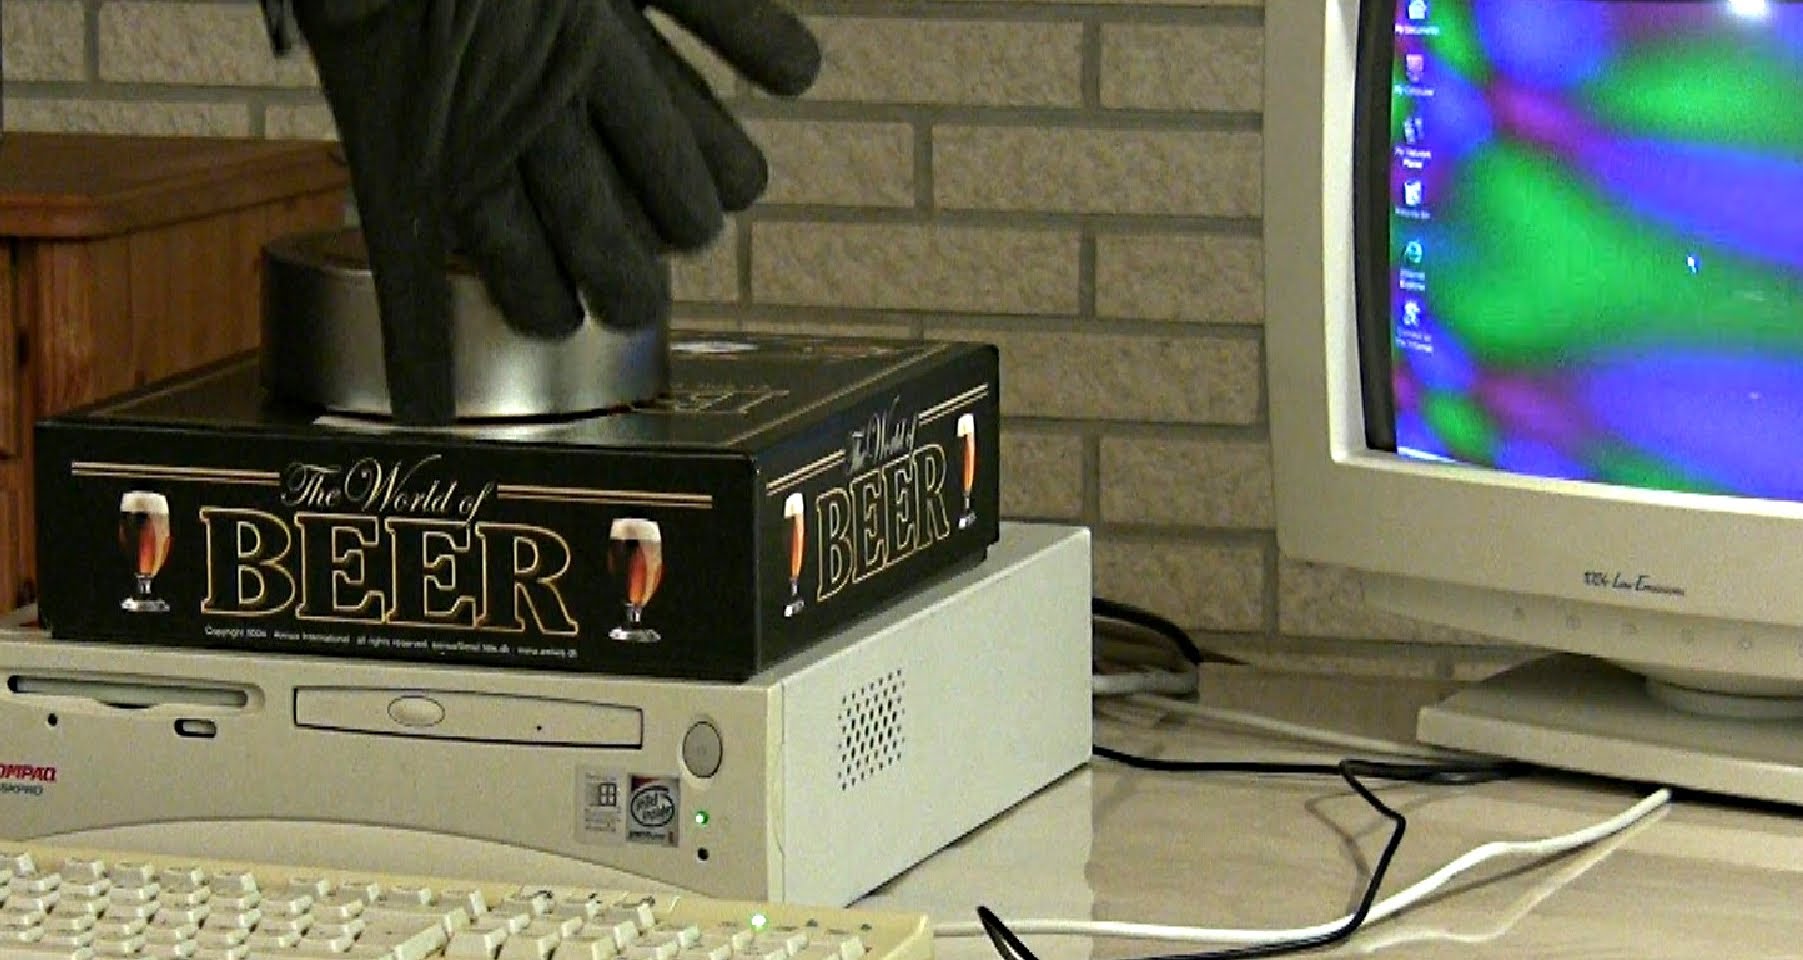 Monster magnet meets computer...